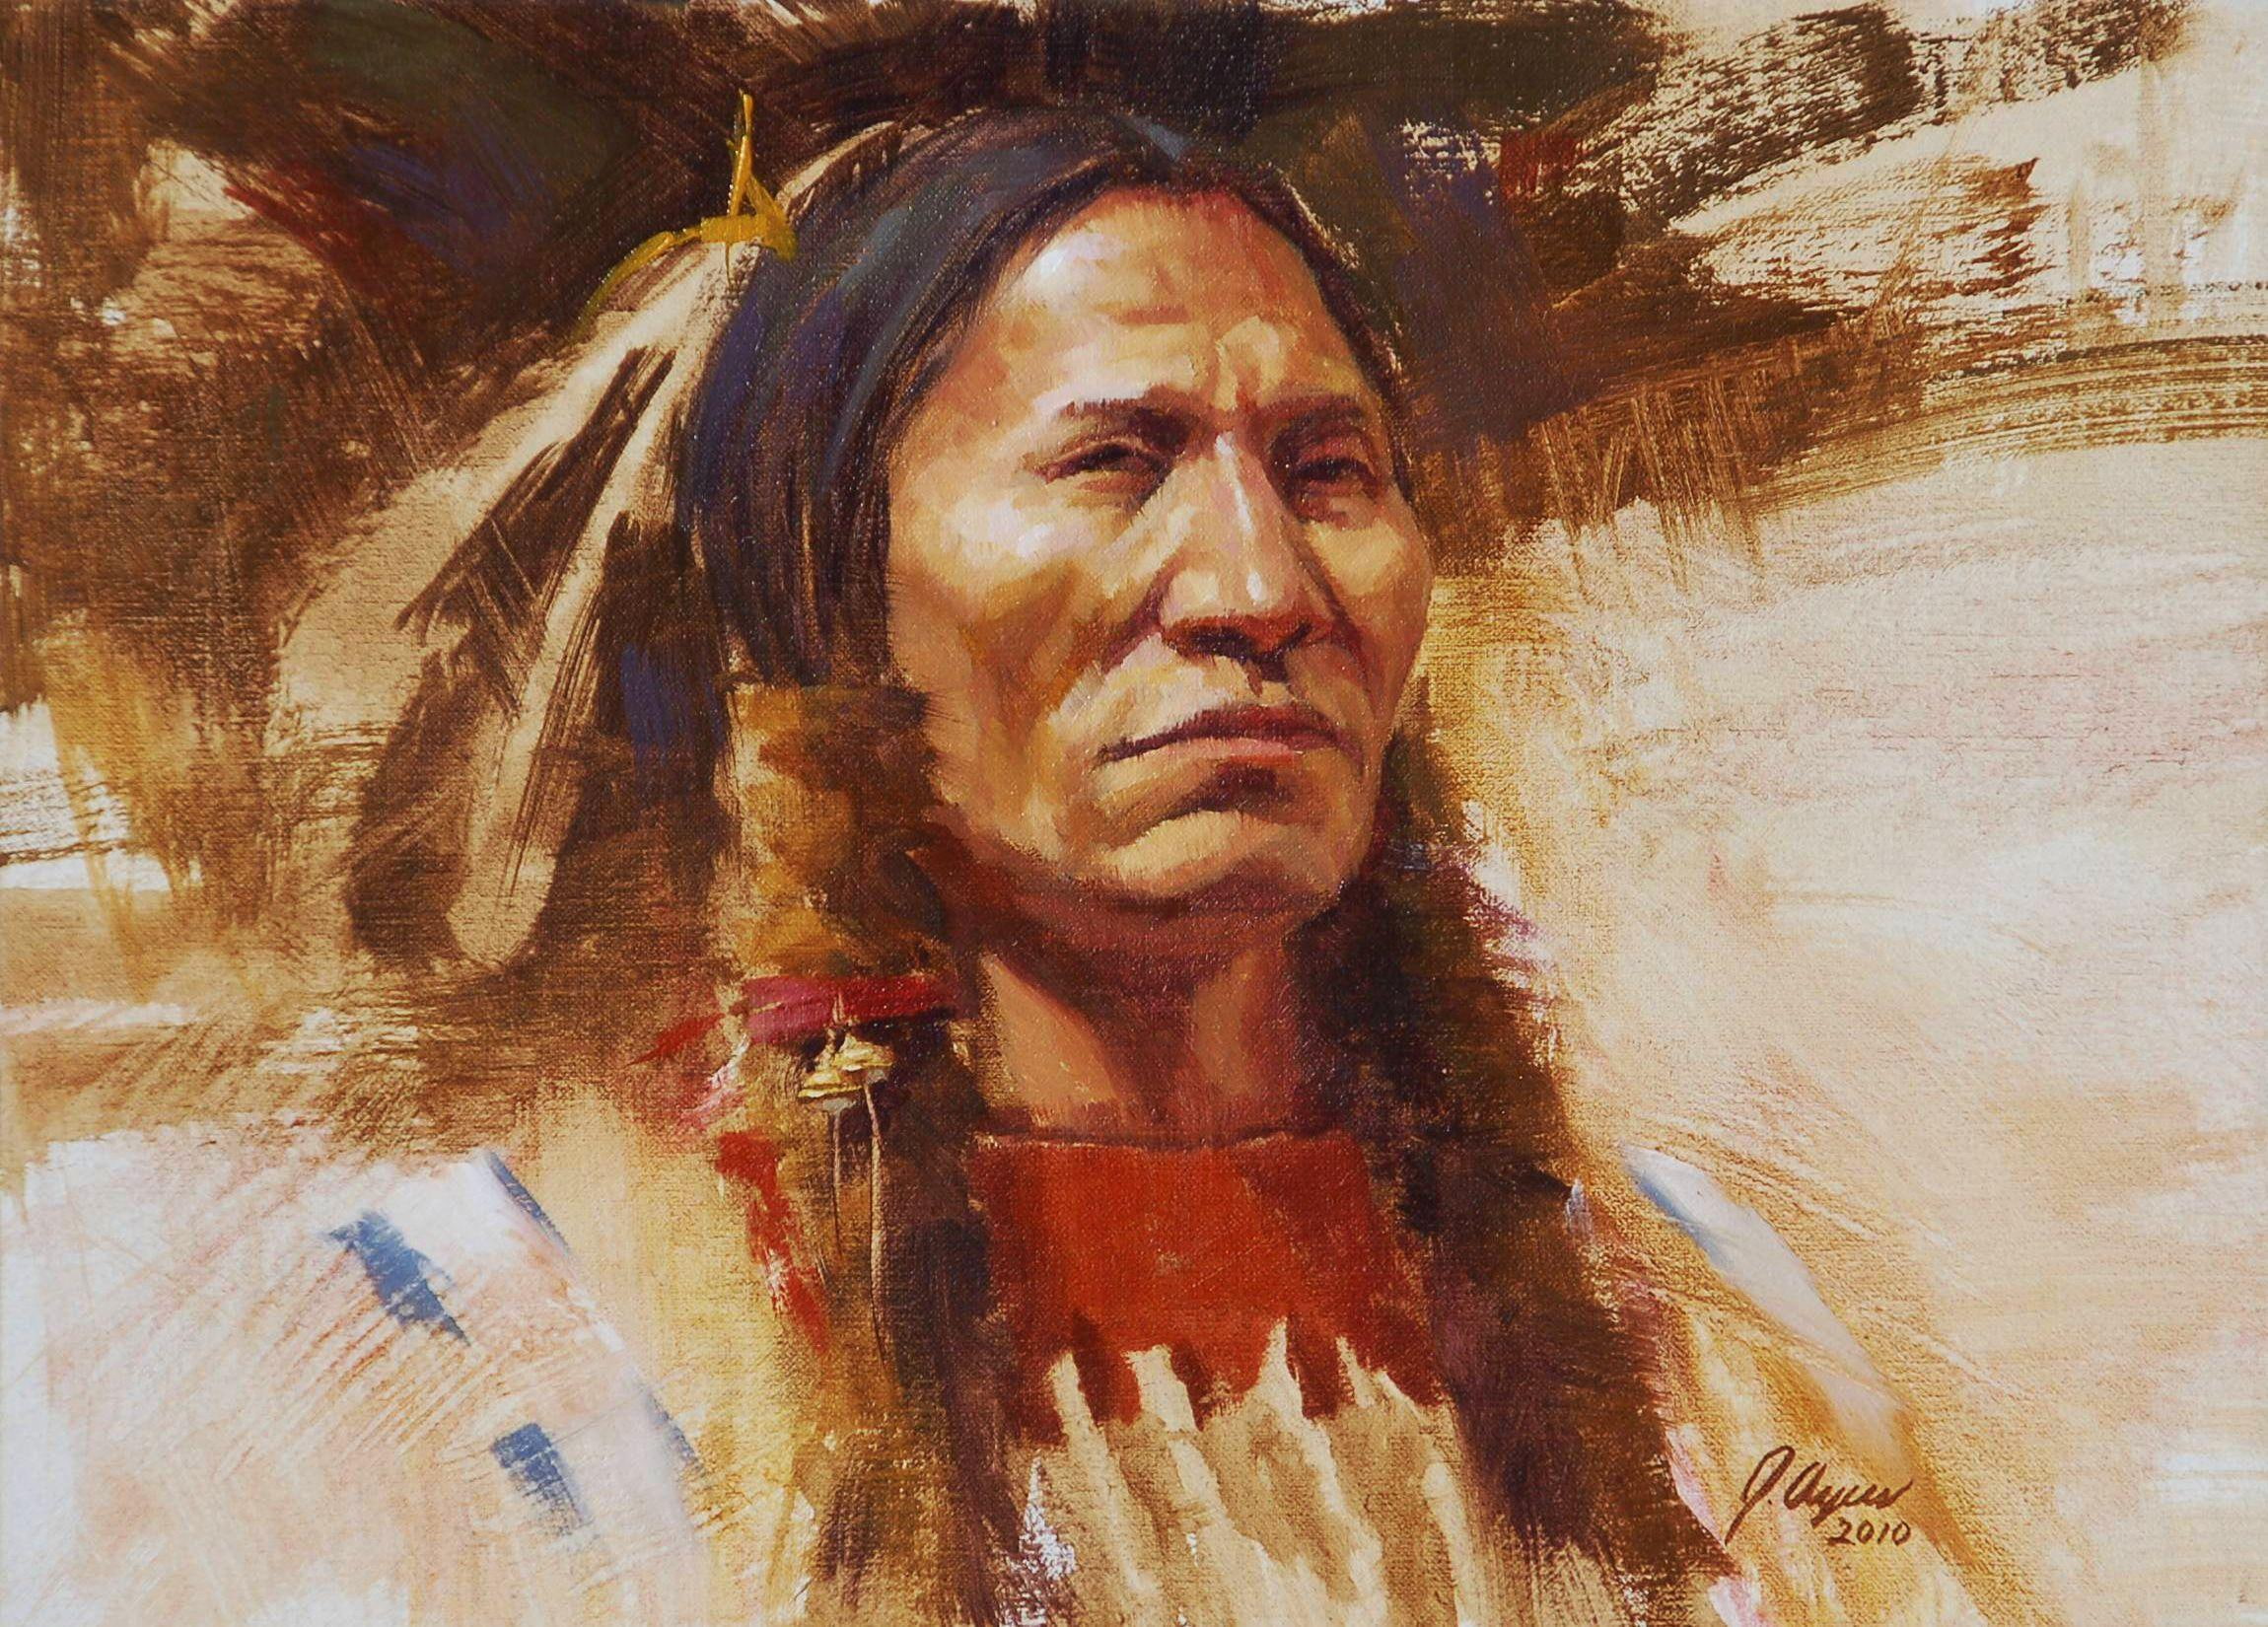 Native American, native american indian male illustration, historic